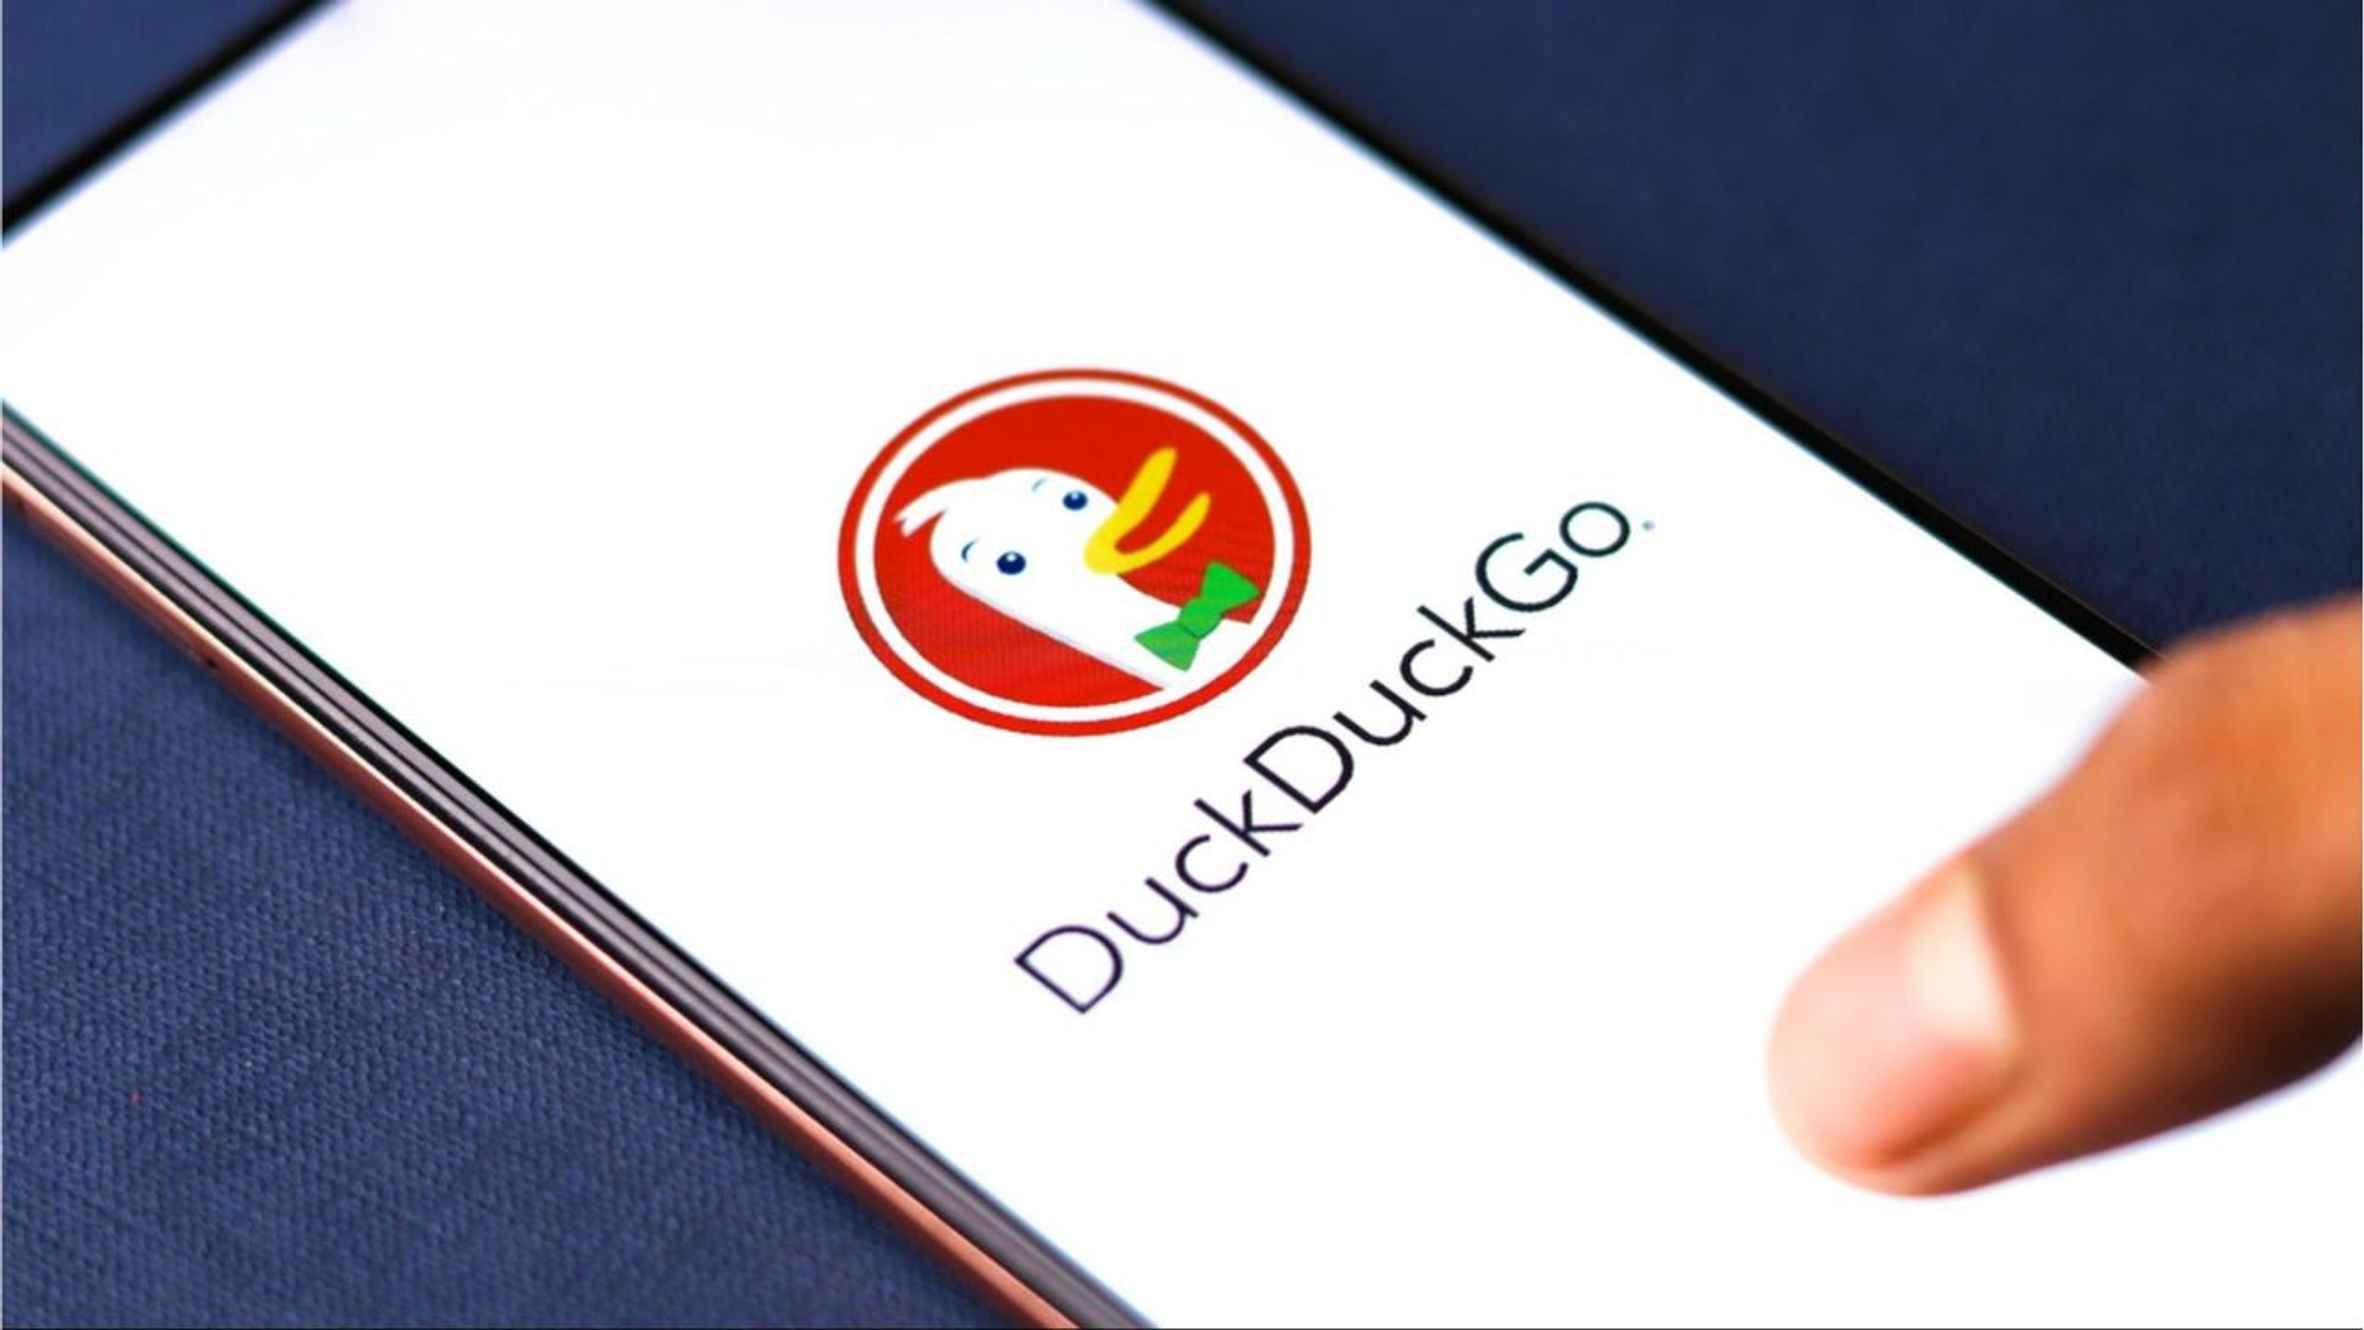 duckduckgo extension review